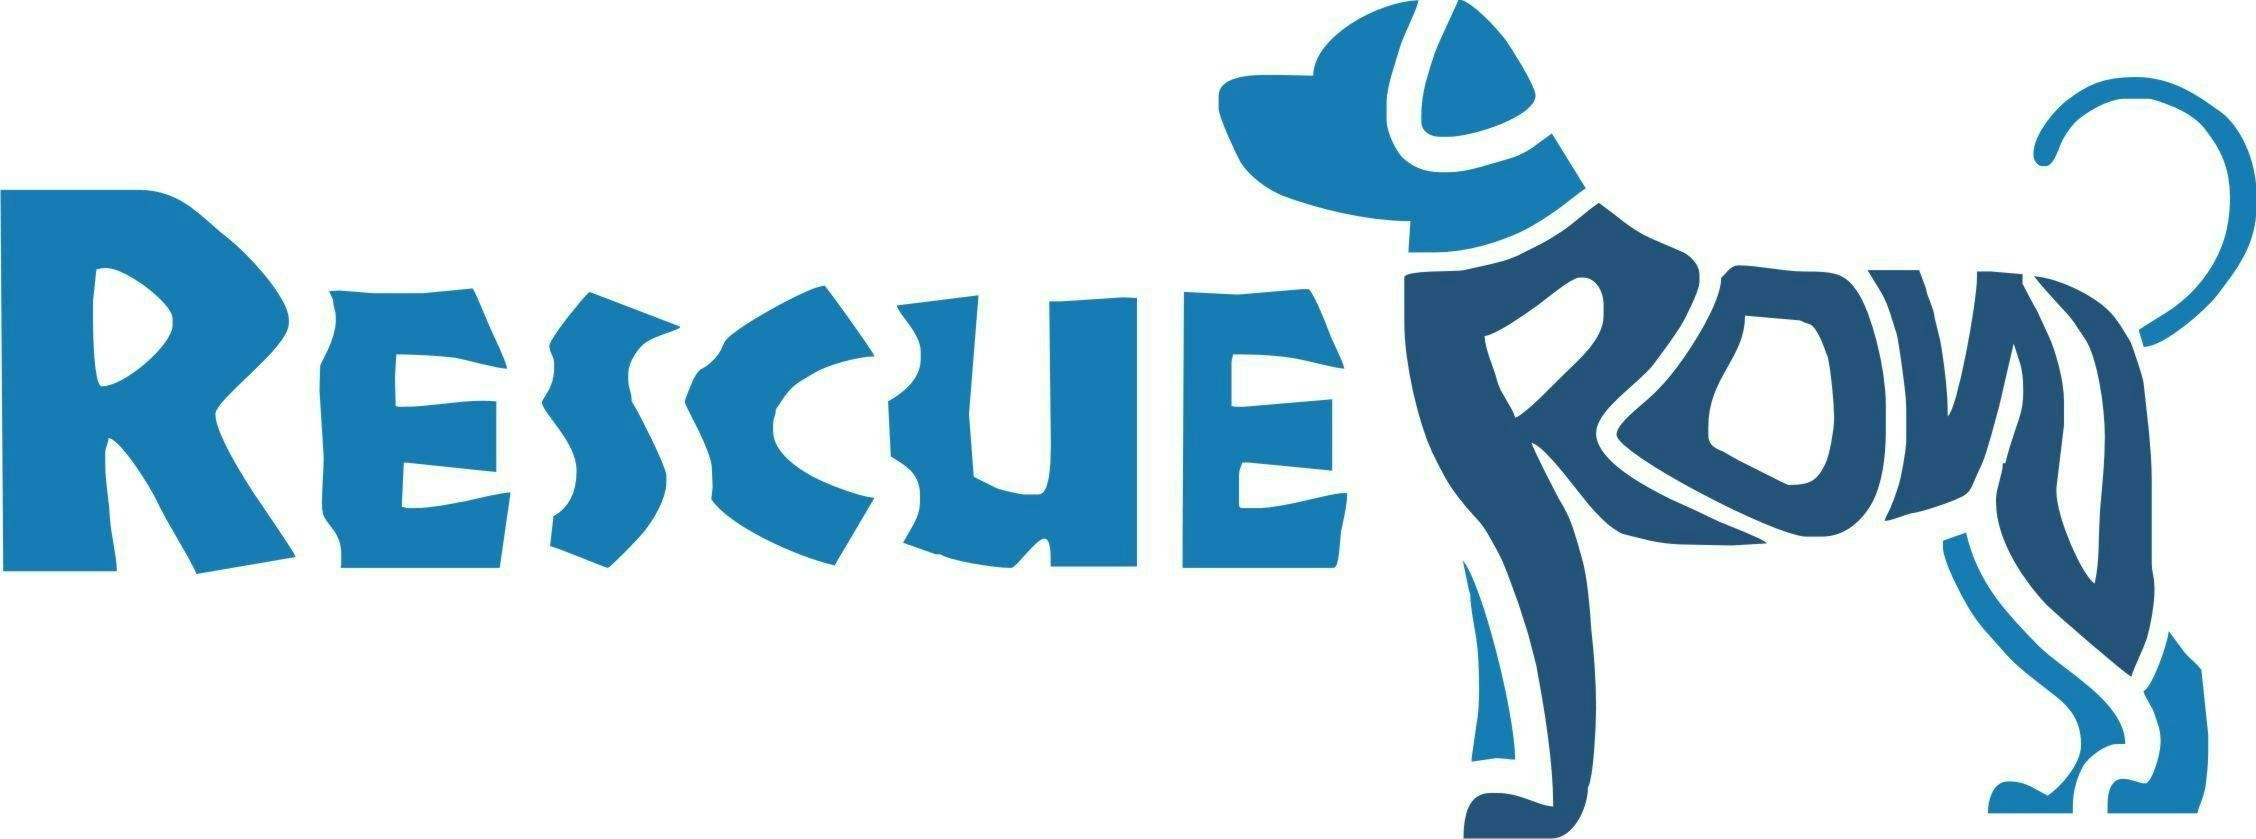 Rescue Row Logo.jpg